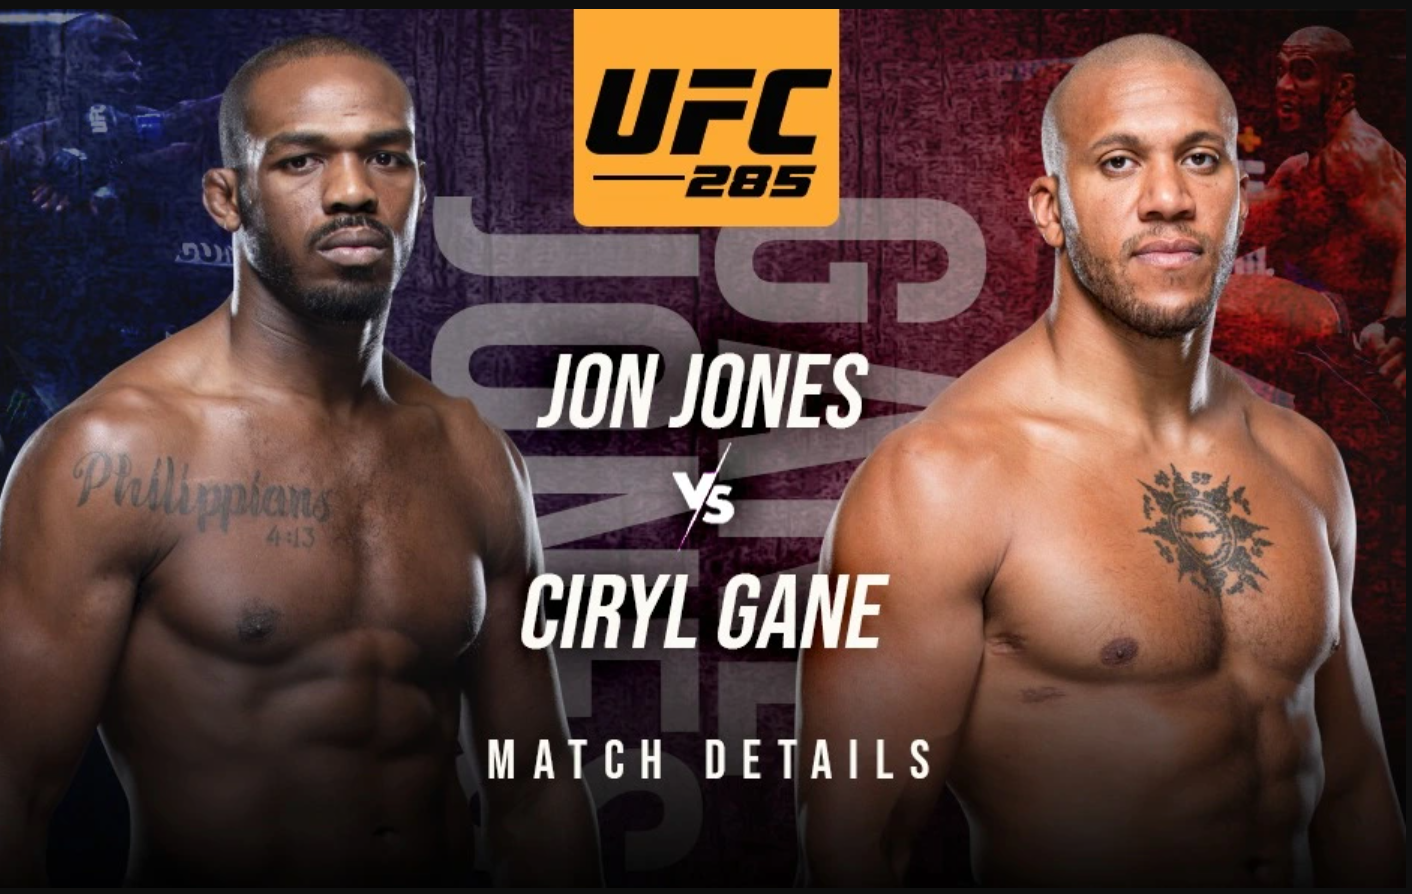 Jon Jones vs Ciryl Gane: Preview, Where to Watch and Betting Odds